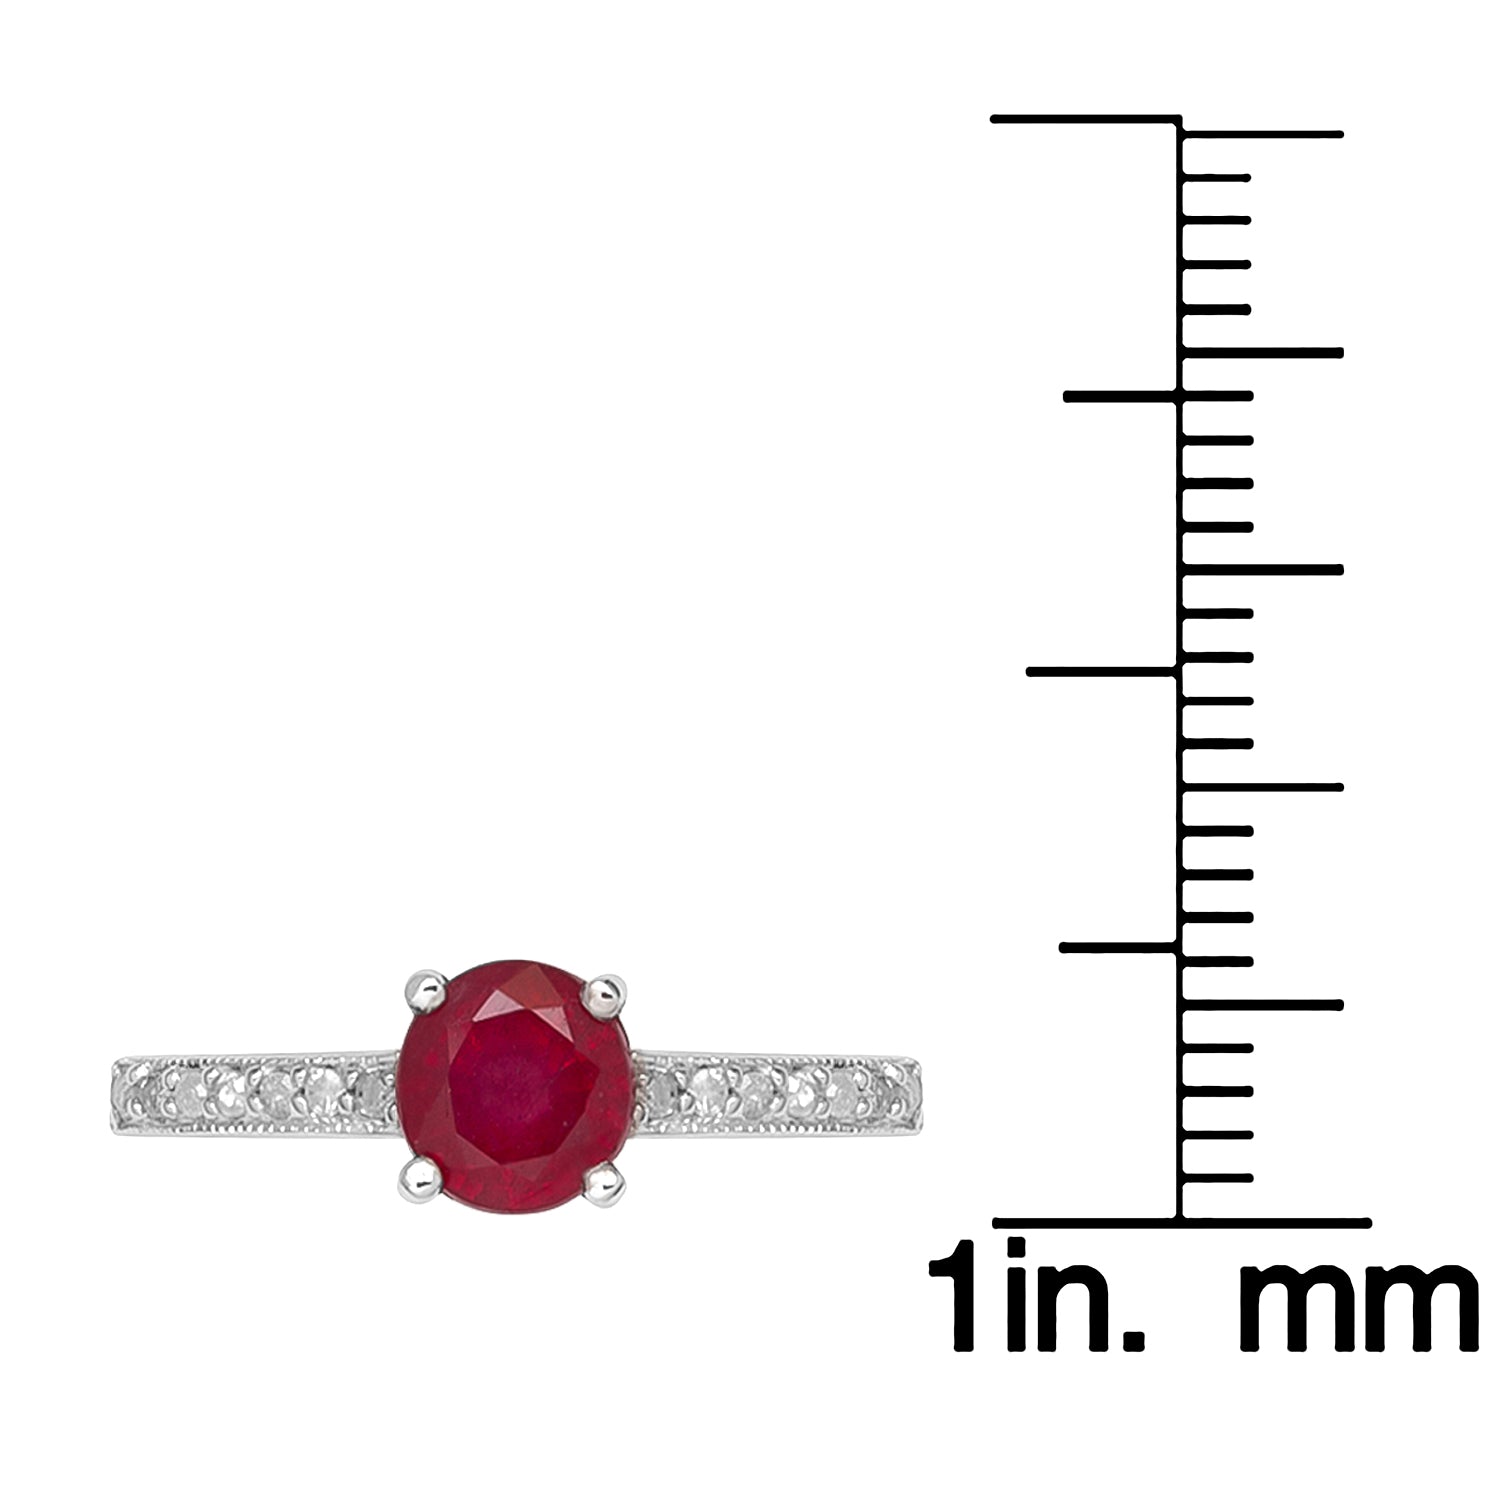 10k White Gold Genuine Round Ruby and Diamond Ring